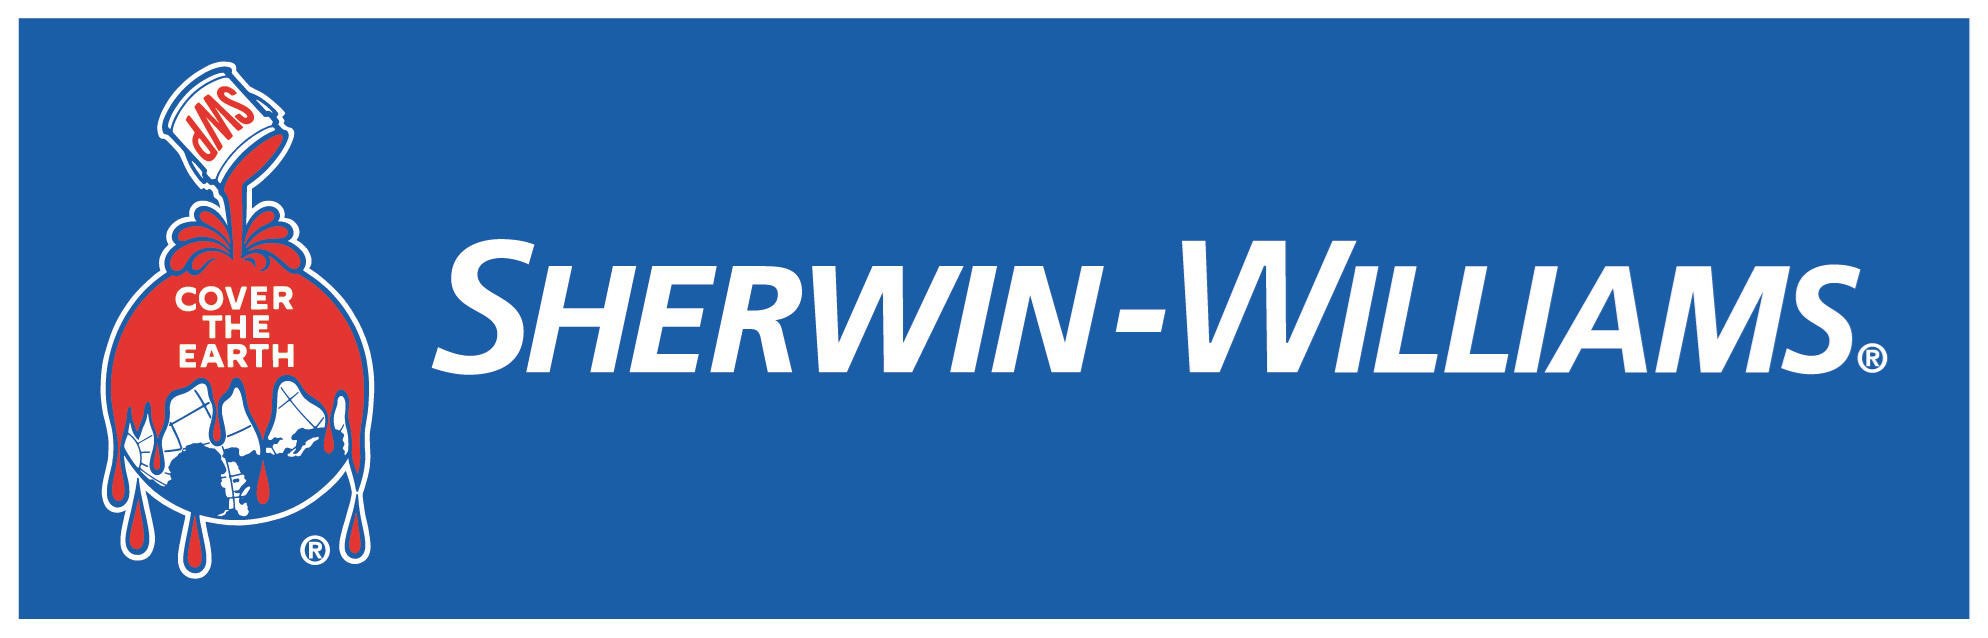 Sherwin Williams Logos